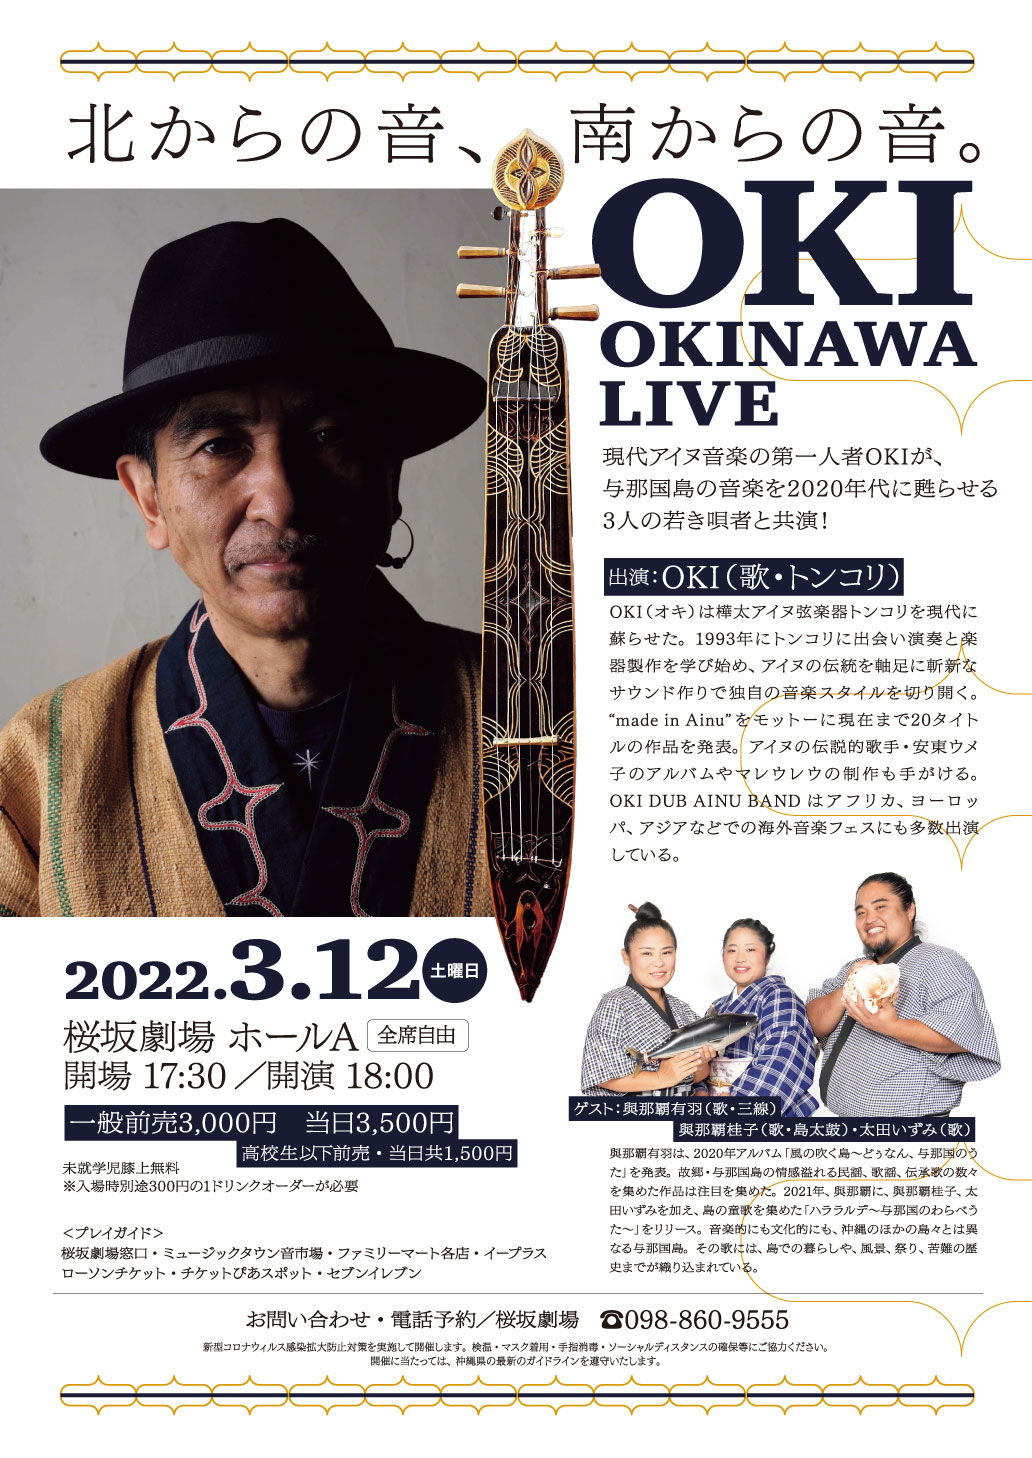 OKI OKINAWA LIVE -DAY2- ”北からの音・南からの音”